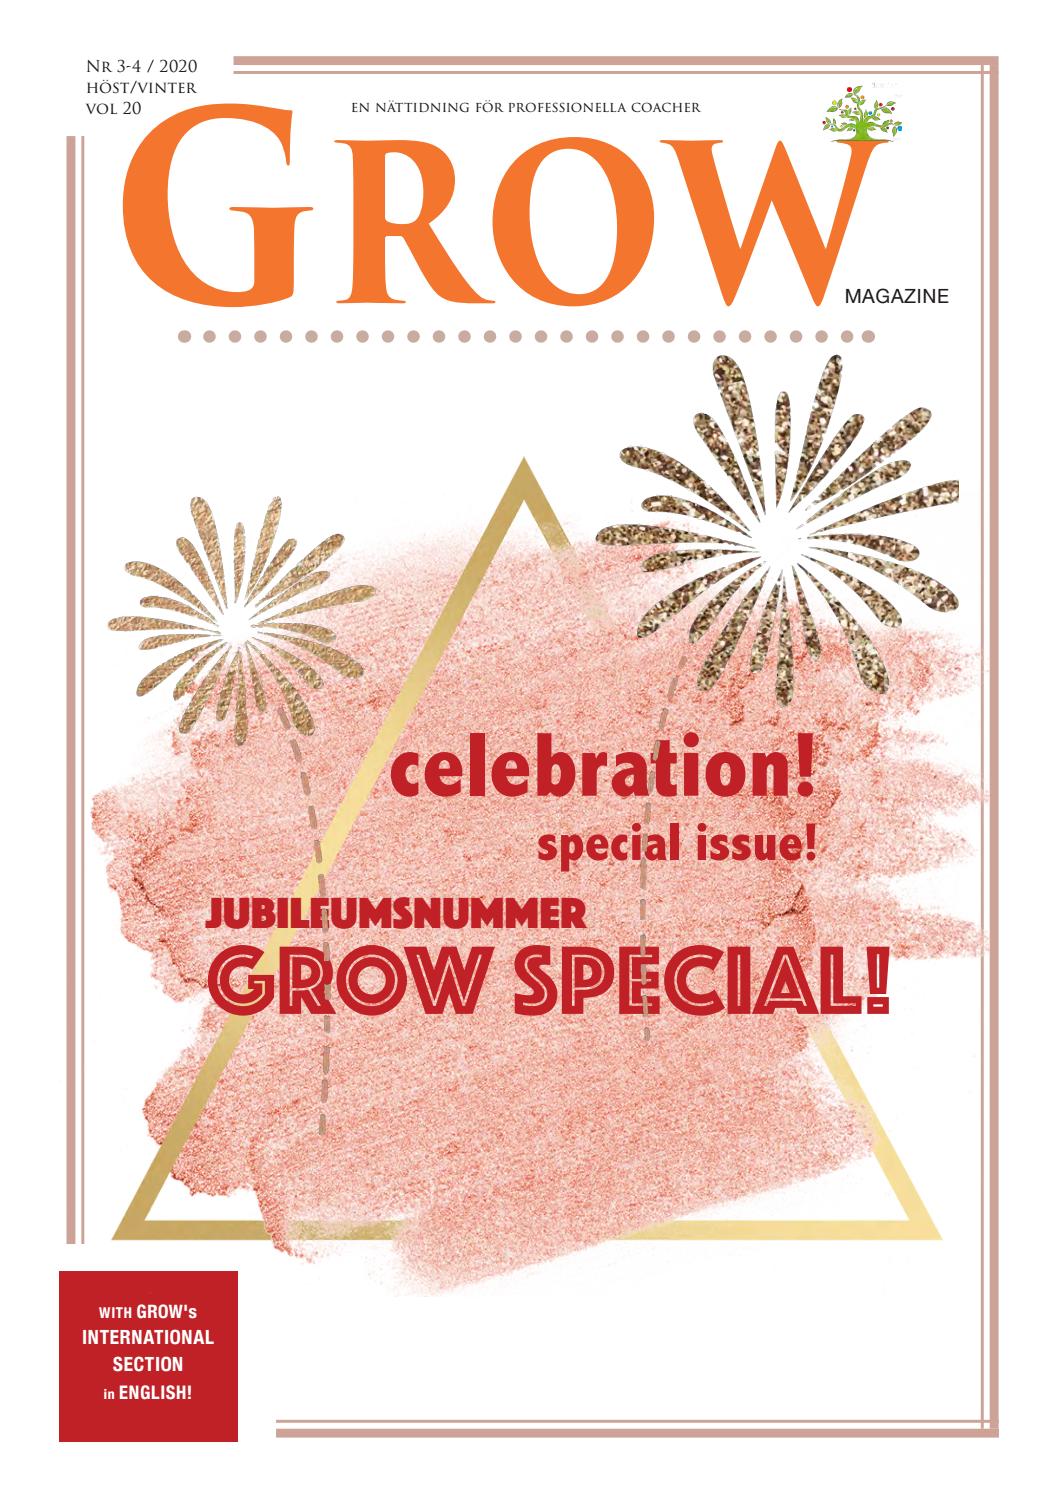 GROW magazine 3-4/2020 vol 20  GROW Special!  det B?STA & MEST L?STA!